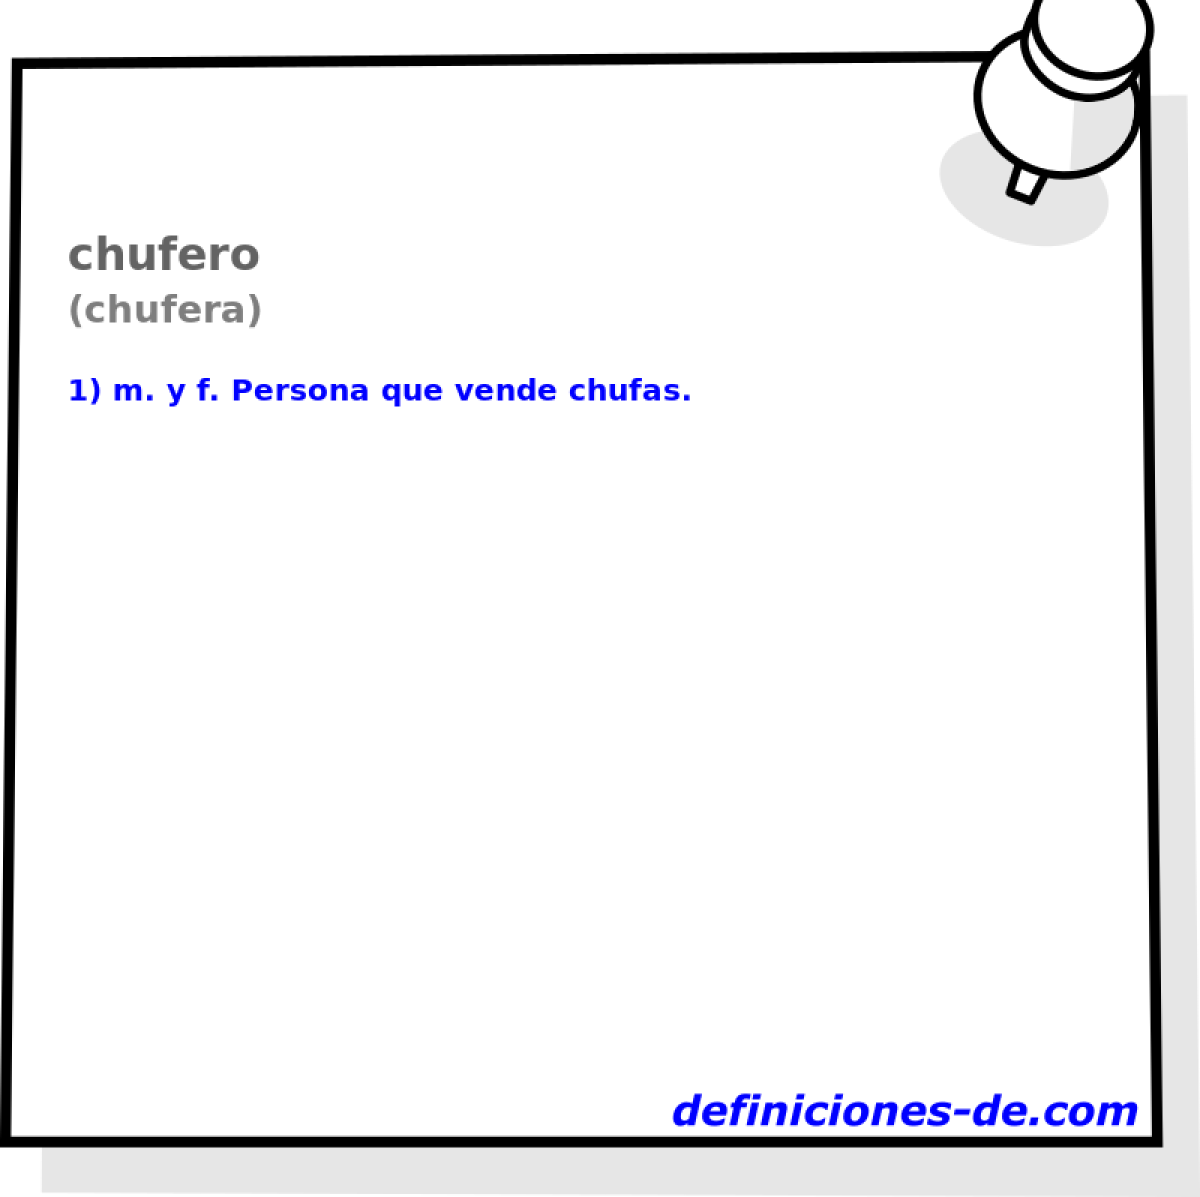 chufero (chufera)